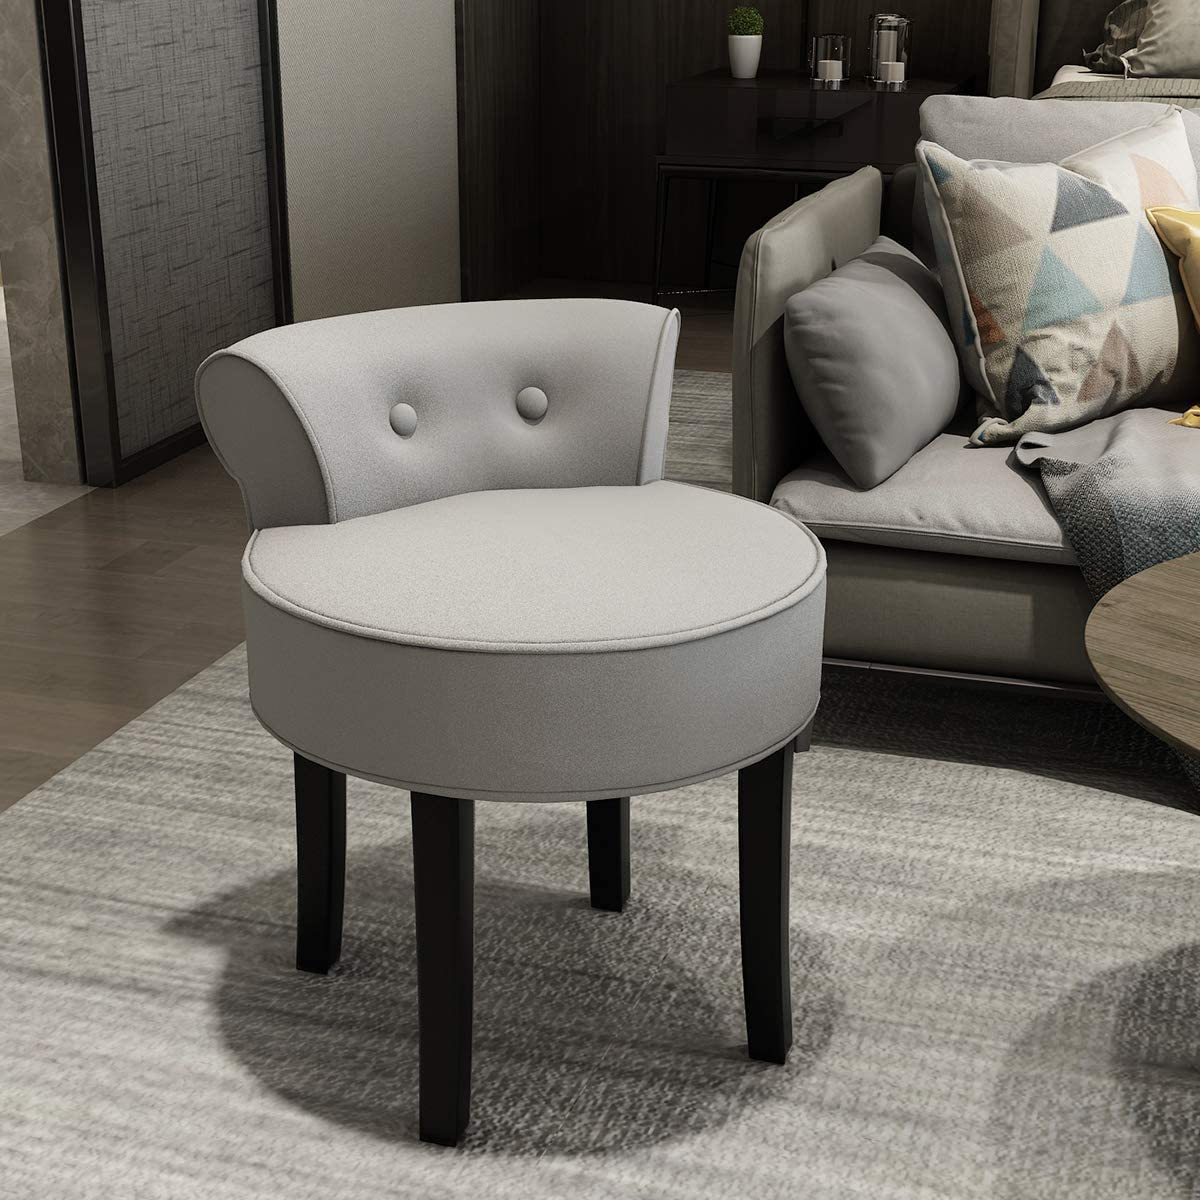 Vanity Chair Wood Legs (Grey) Home Office Garden | HOG-HomeOfficeGarden | online marketplace